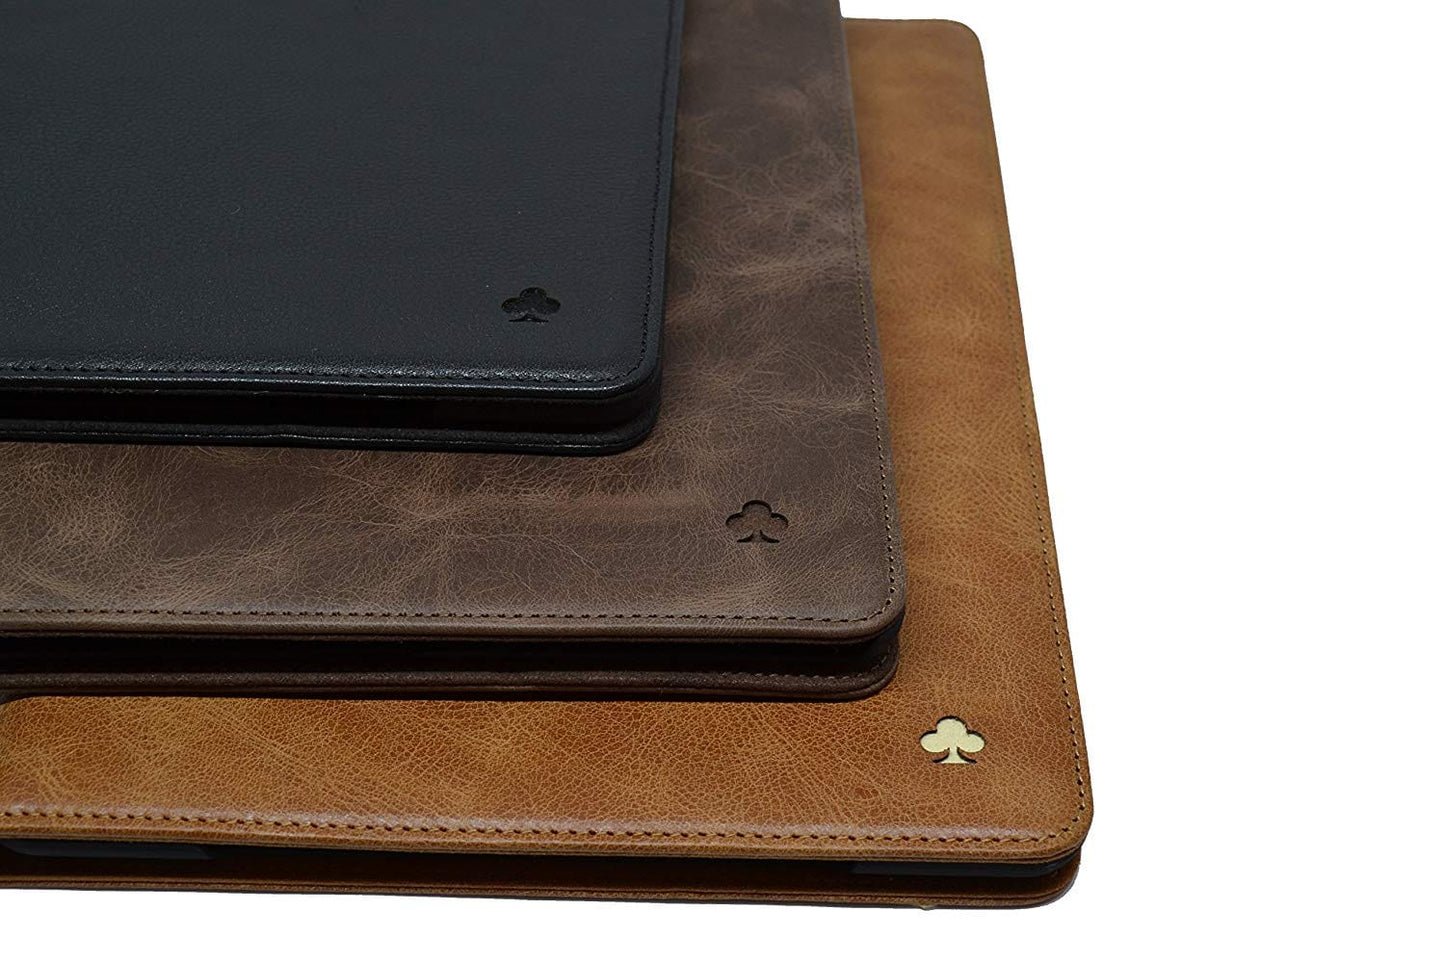 iPad Pro 10.5" (iPad Pro 2) Leather Case. Premium Slim Genuine Leather Stand Case/Cover/Wallet (Tan)